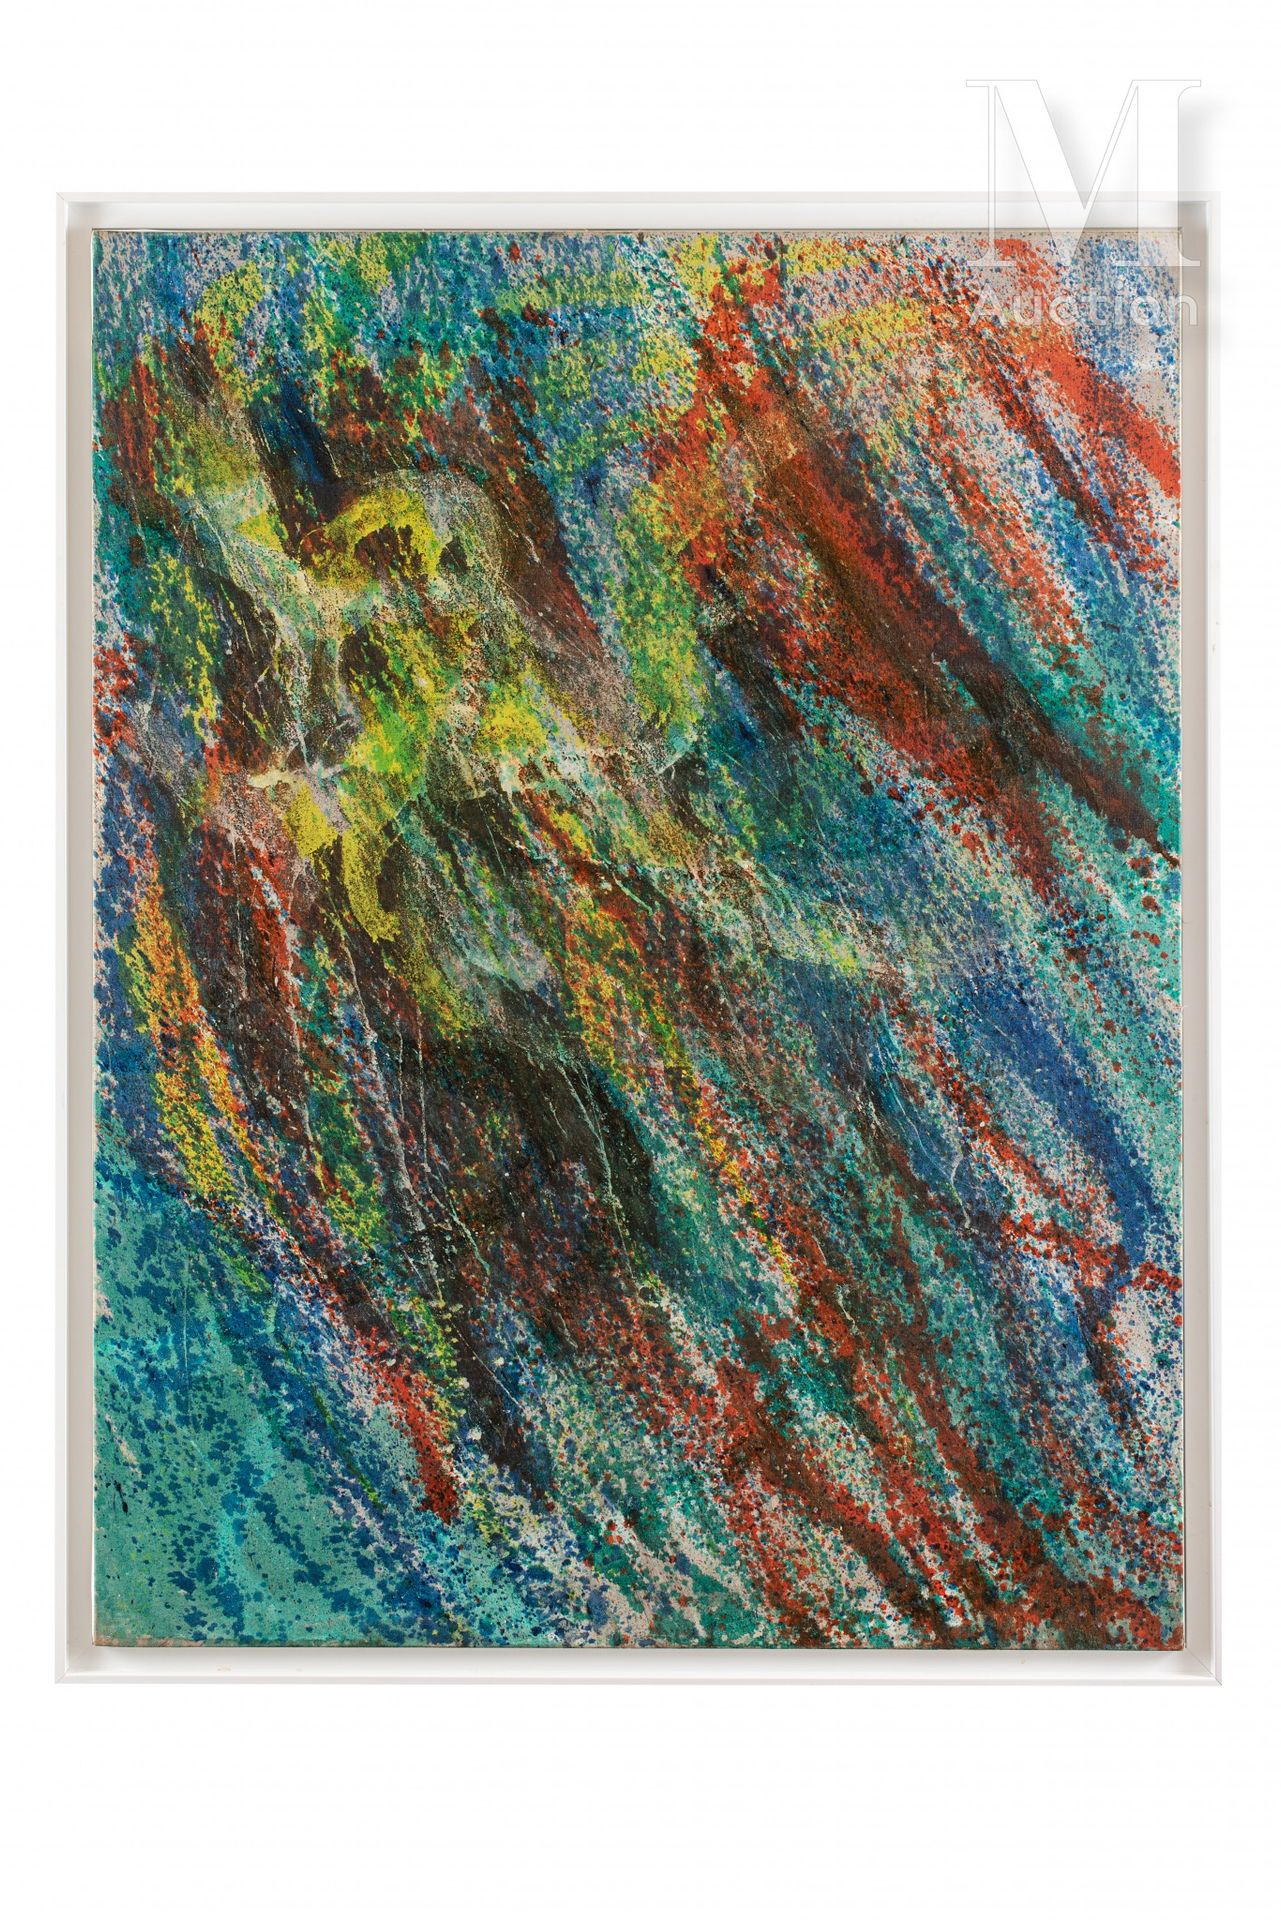 Stanley William HAYTER (1901-1988) La piovra, 1963

Olio su tela

116 x 89 cm


&hellip;